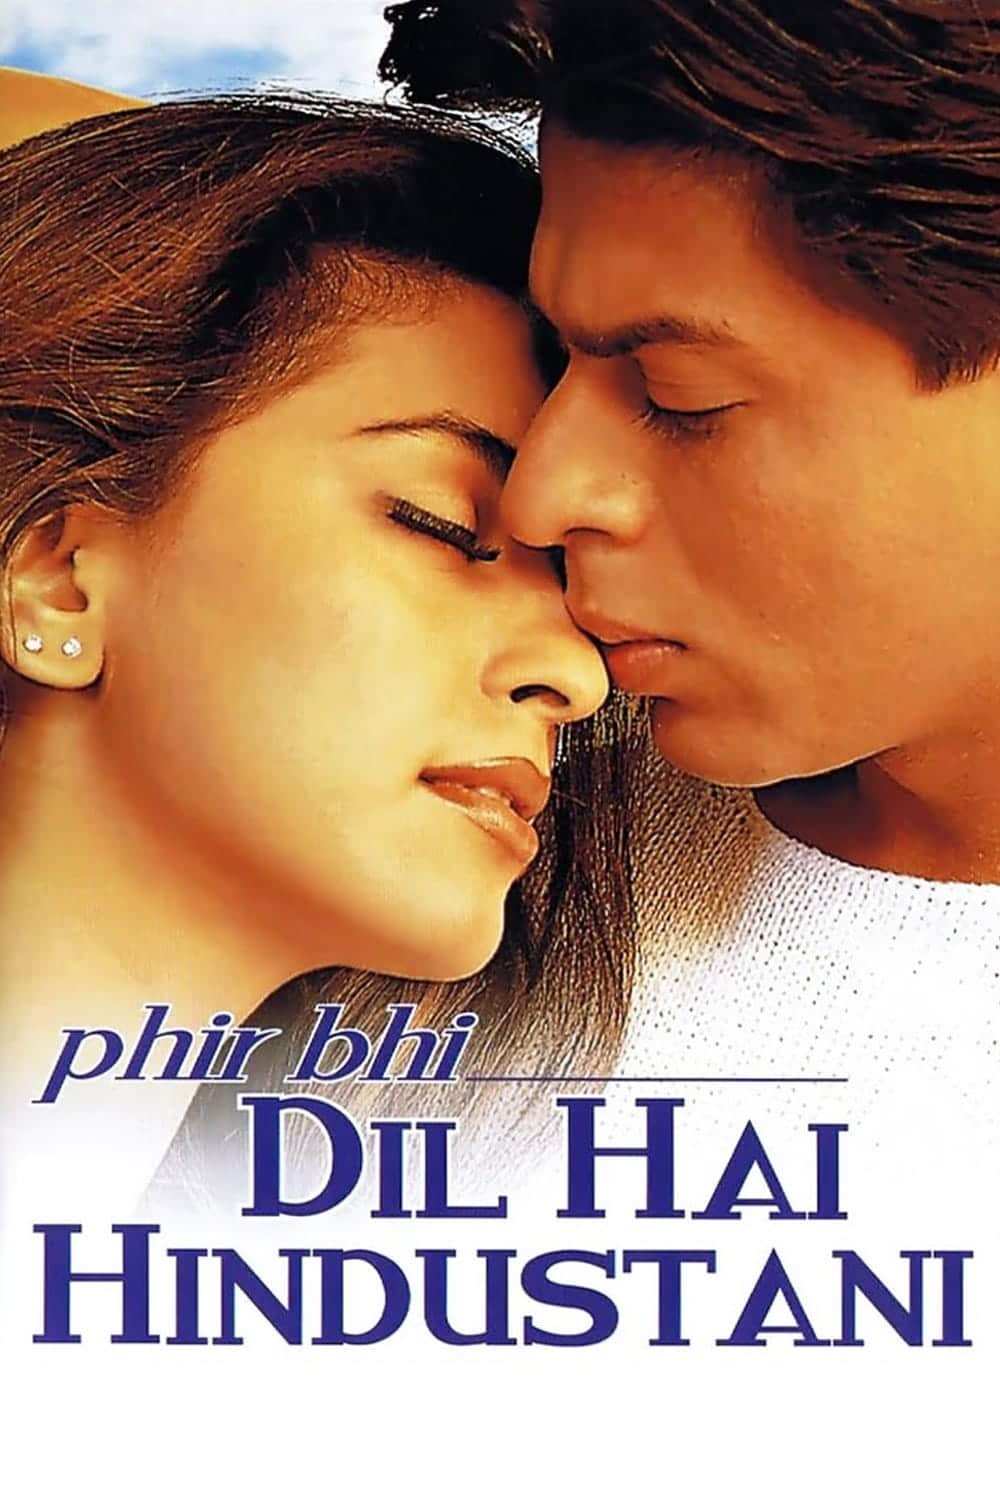 Poster for the movie "Phir Bhi Dil Hai Hindustani"